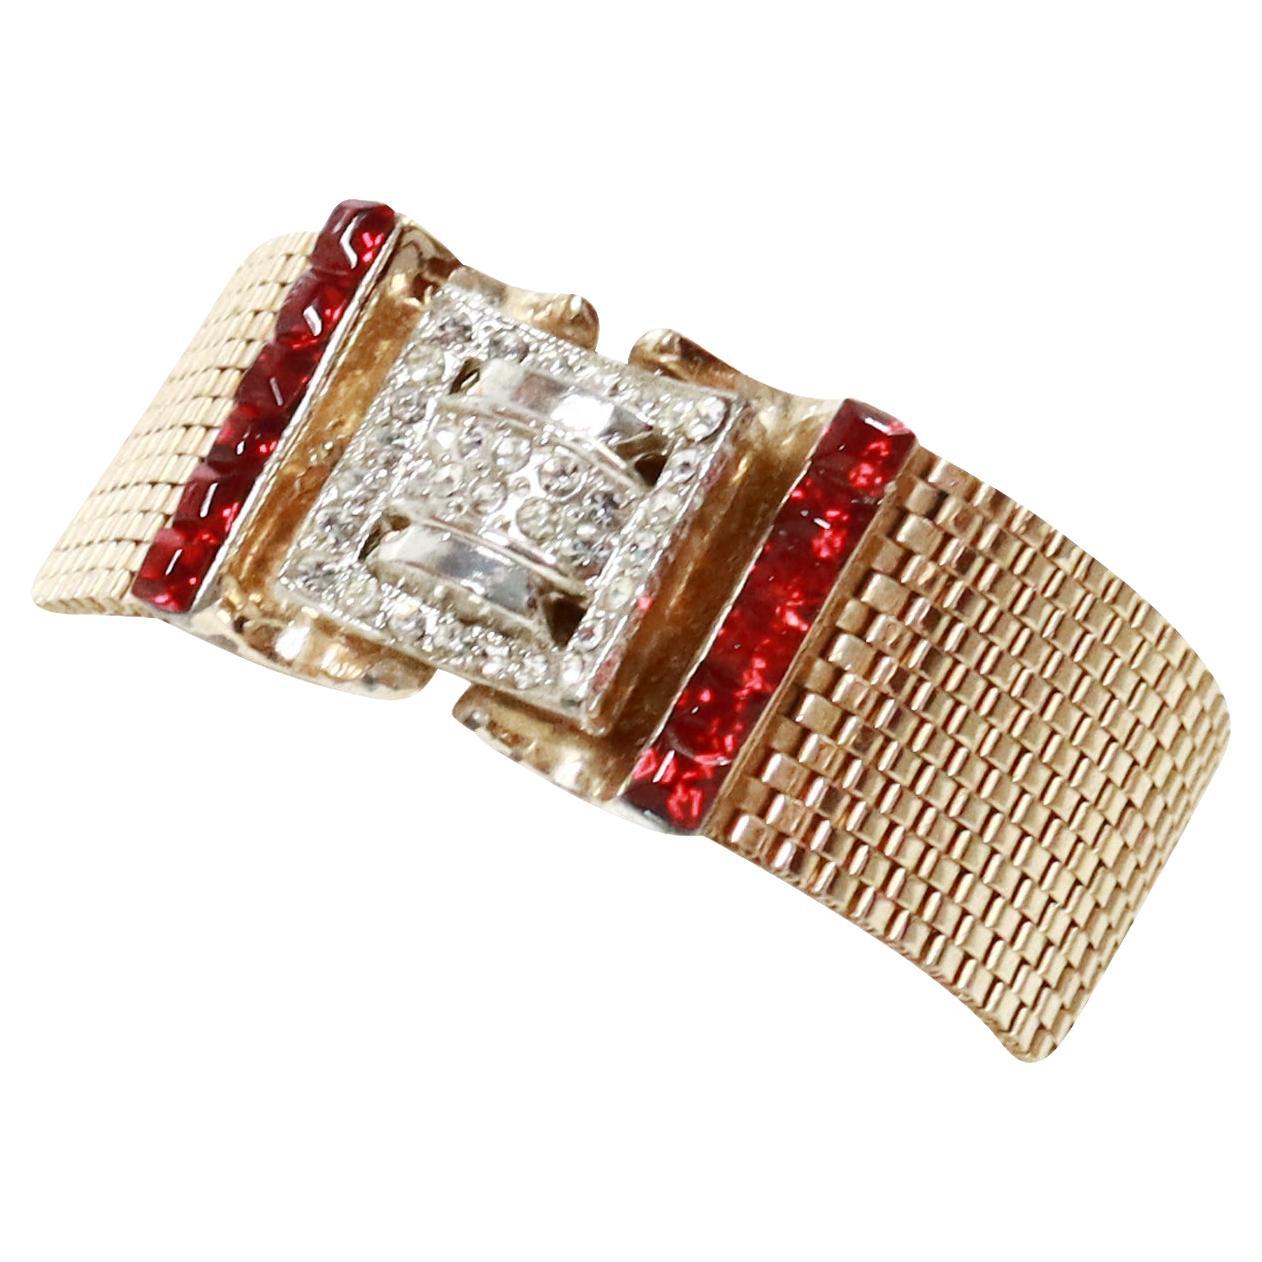 Vintage Goldfarbenes Diamant-Armband mit roter Schnalle, ca. 1940er Jahre